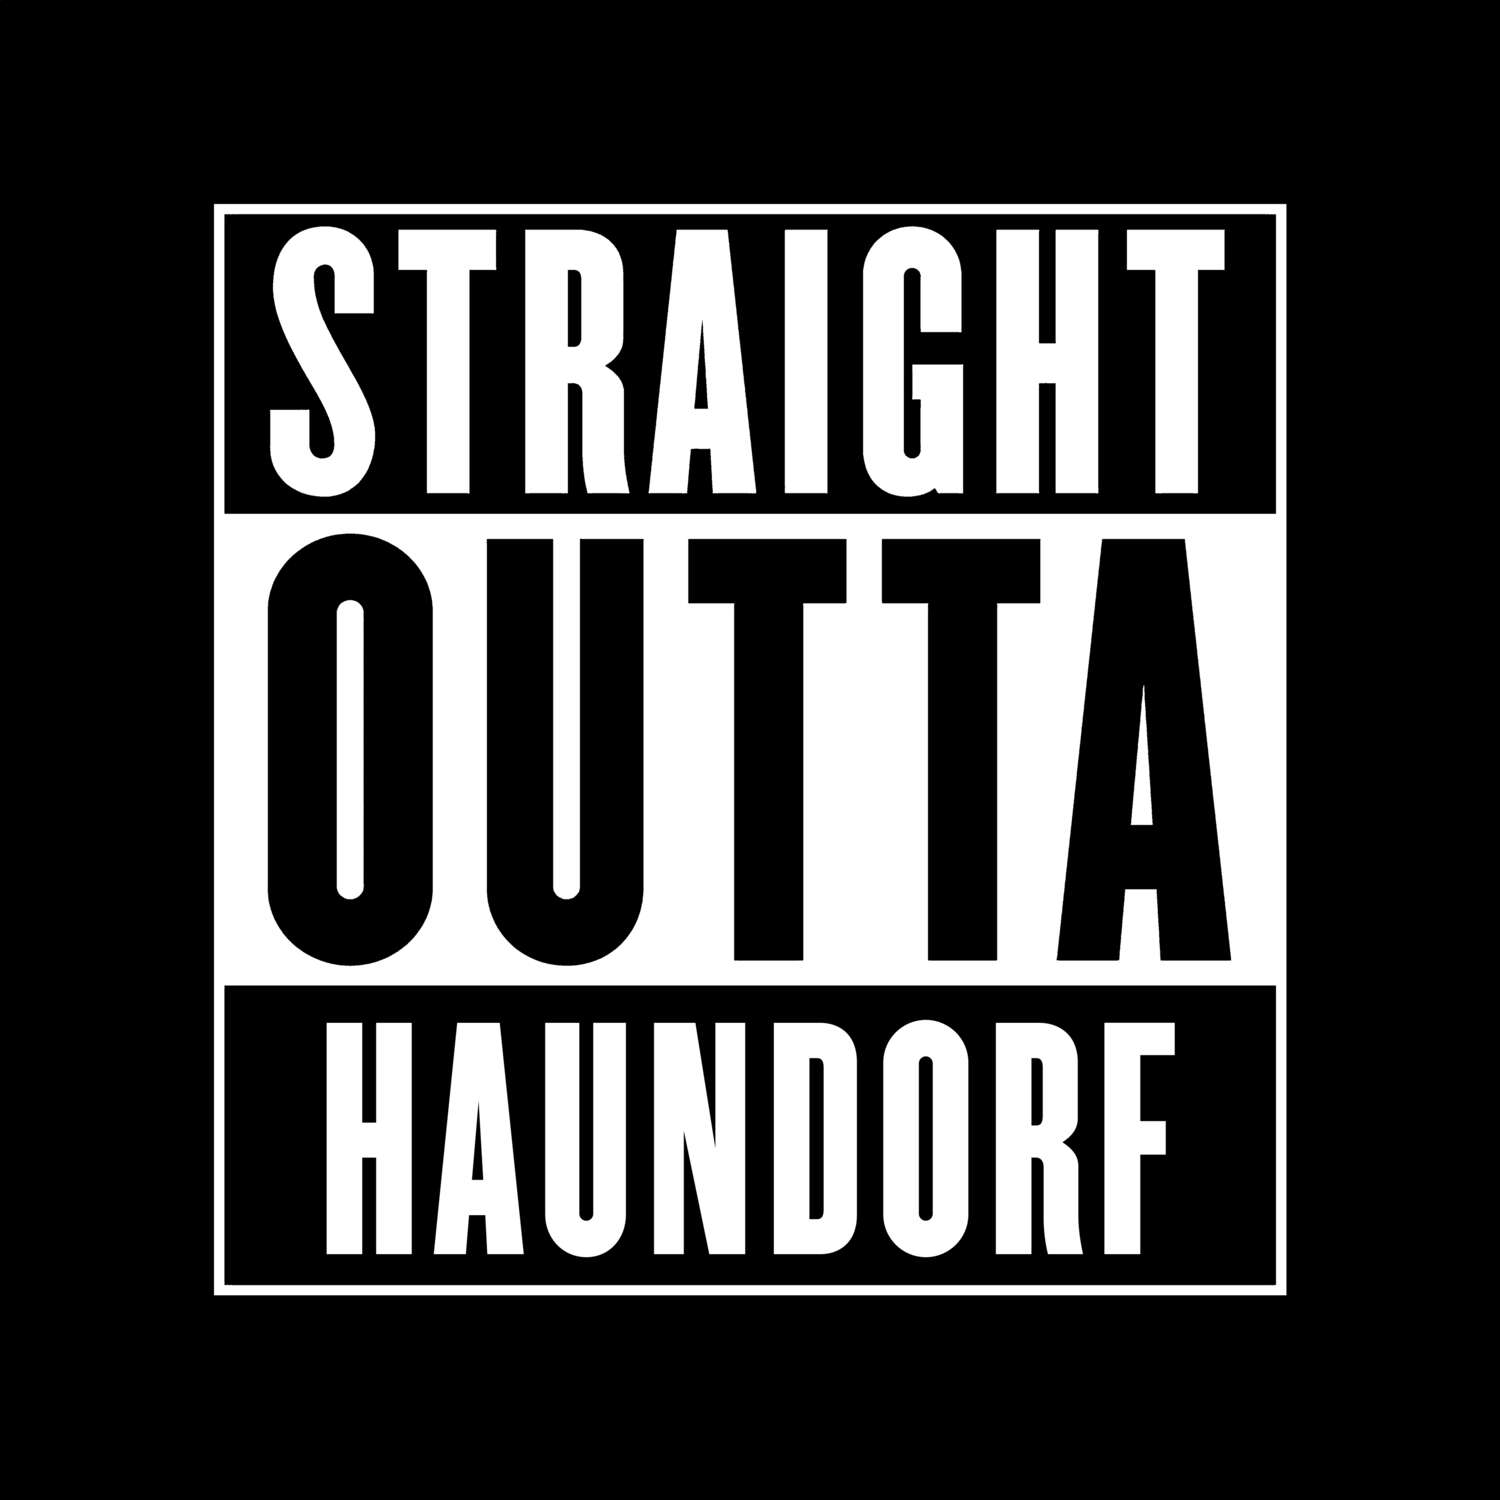 Haundorf T-Shirt »Straight Outta«